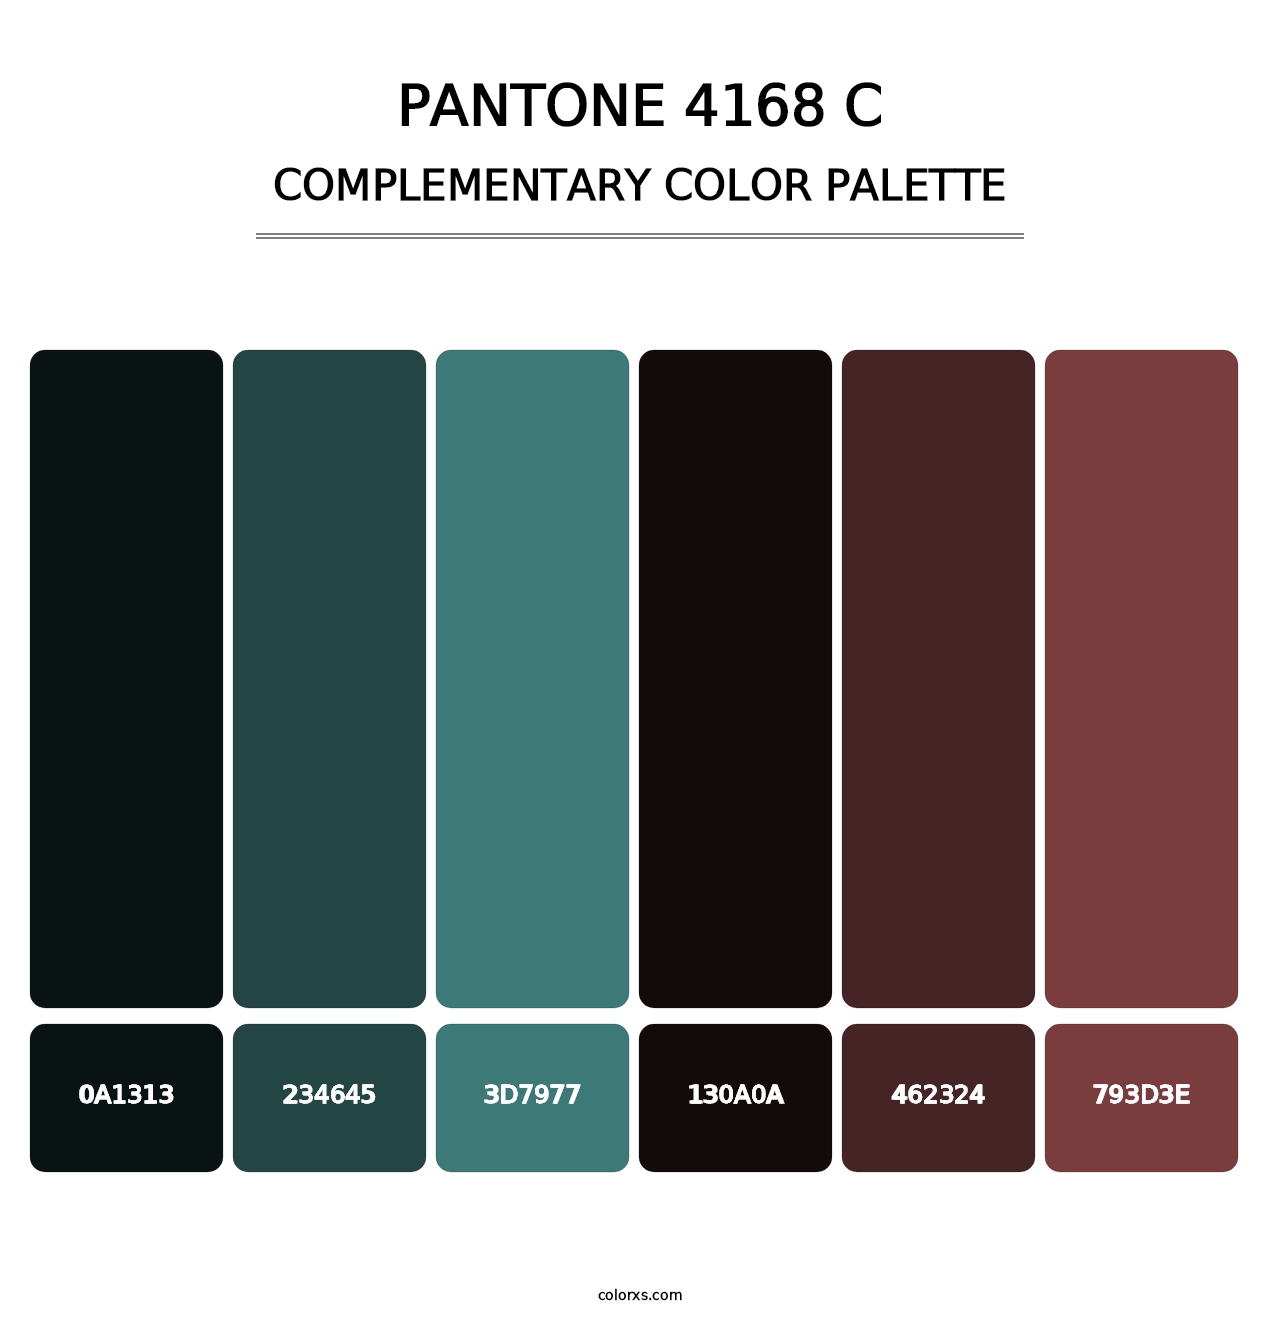 PANTONE 4168 C - Complementary Color Palette